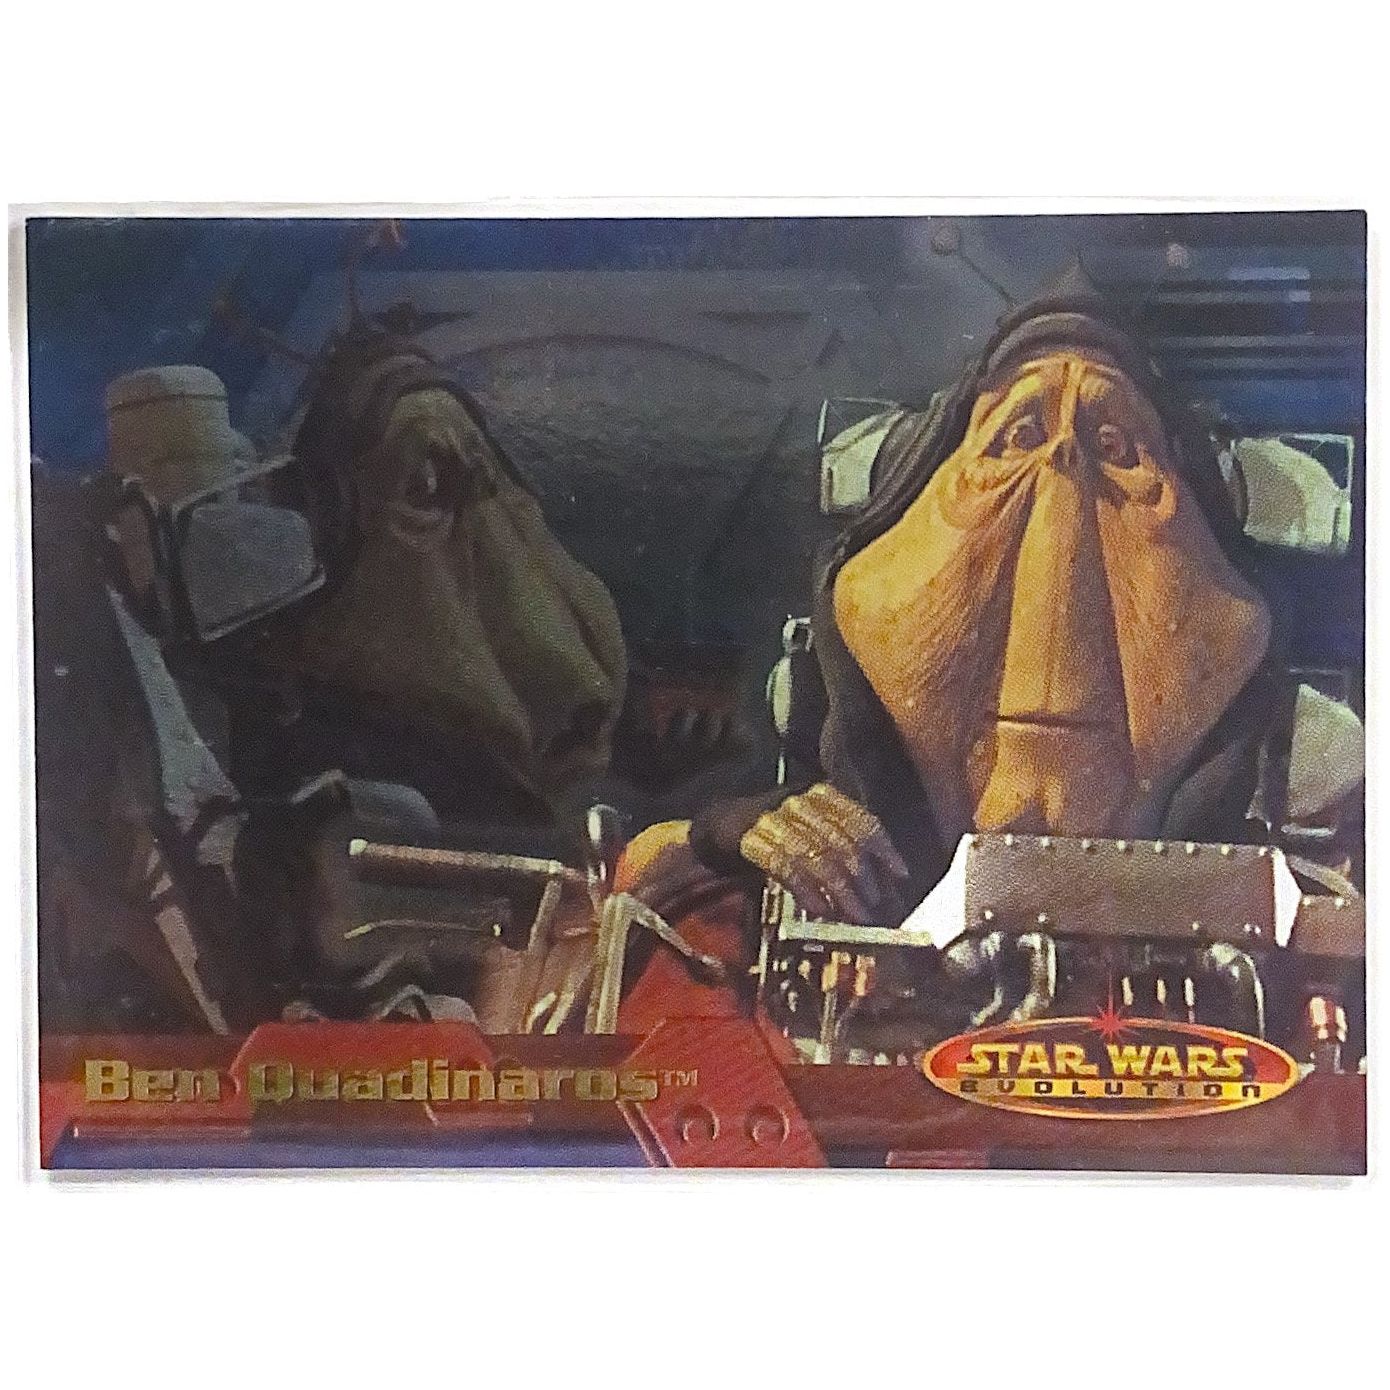  2001 Topps Star Wars Ben Quadinaros Evolution #7  Local Legends Cards & Collectibles